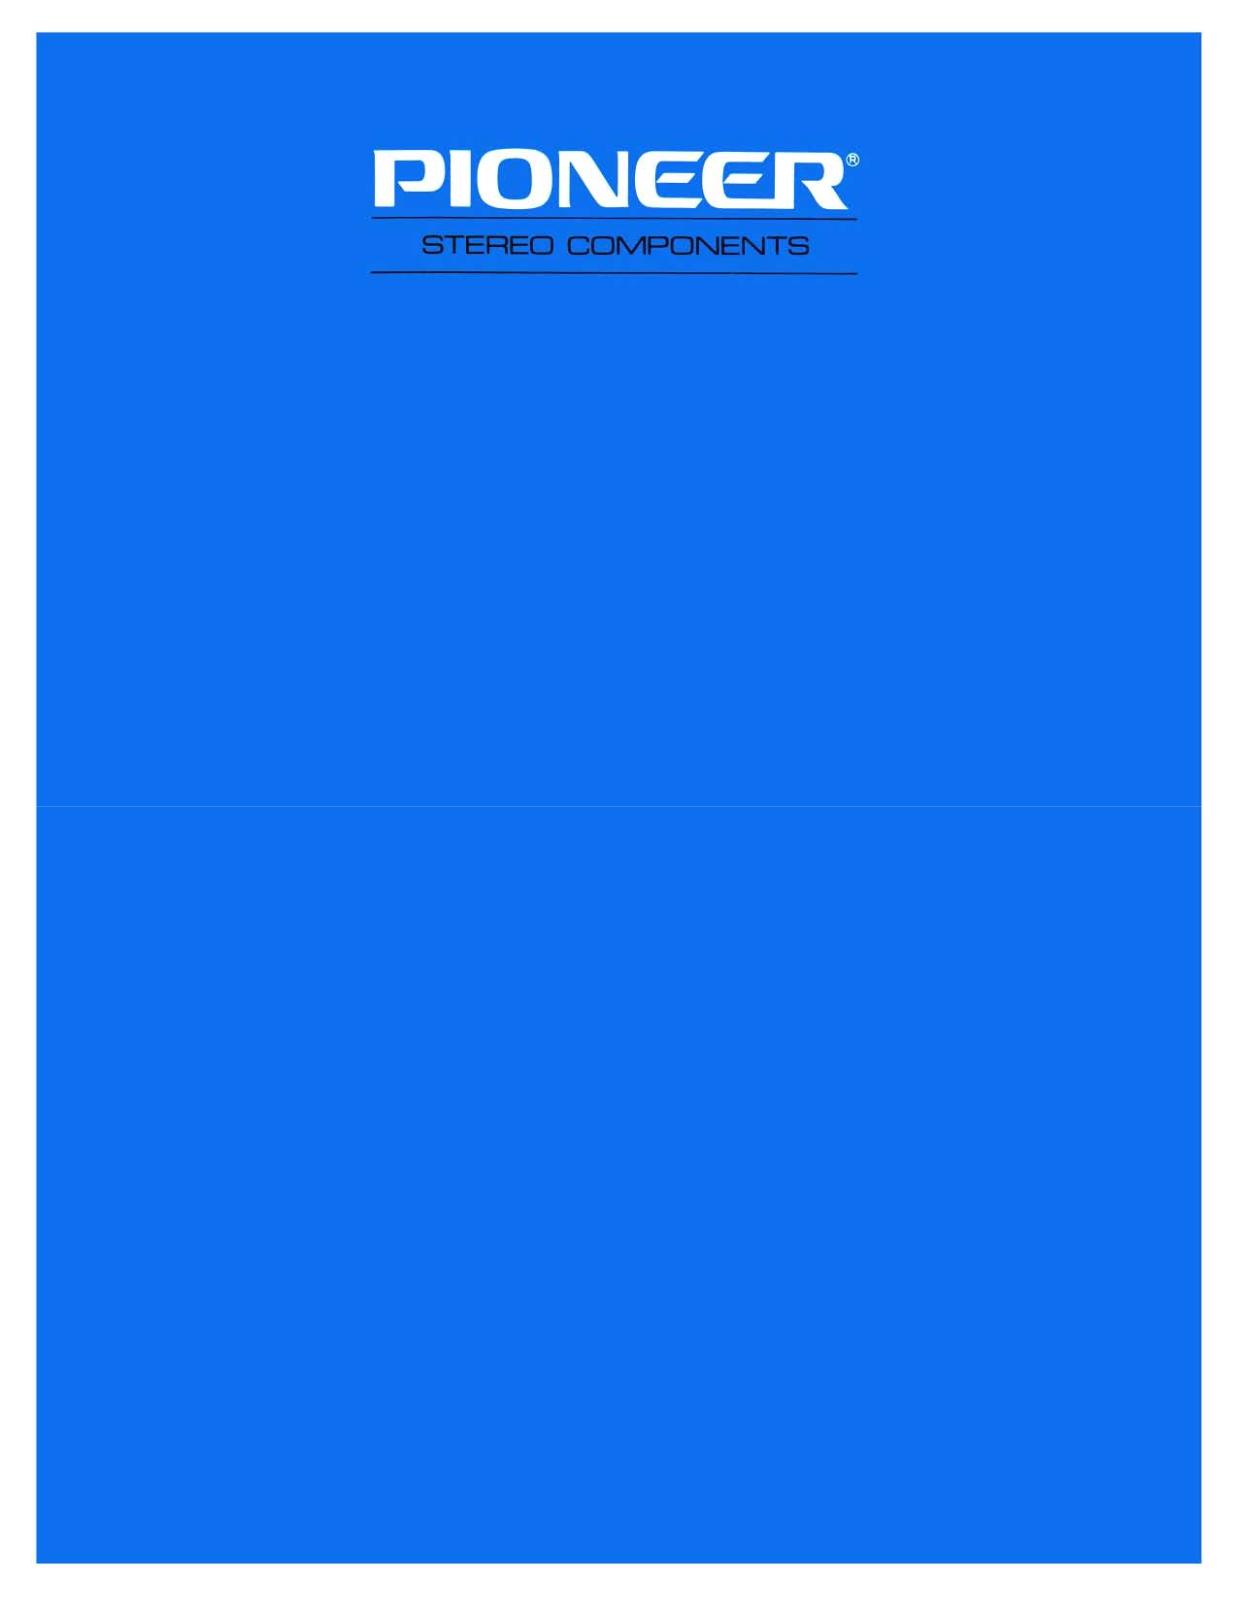 Pioneer 1972 Catalog